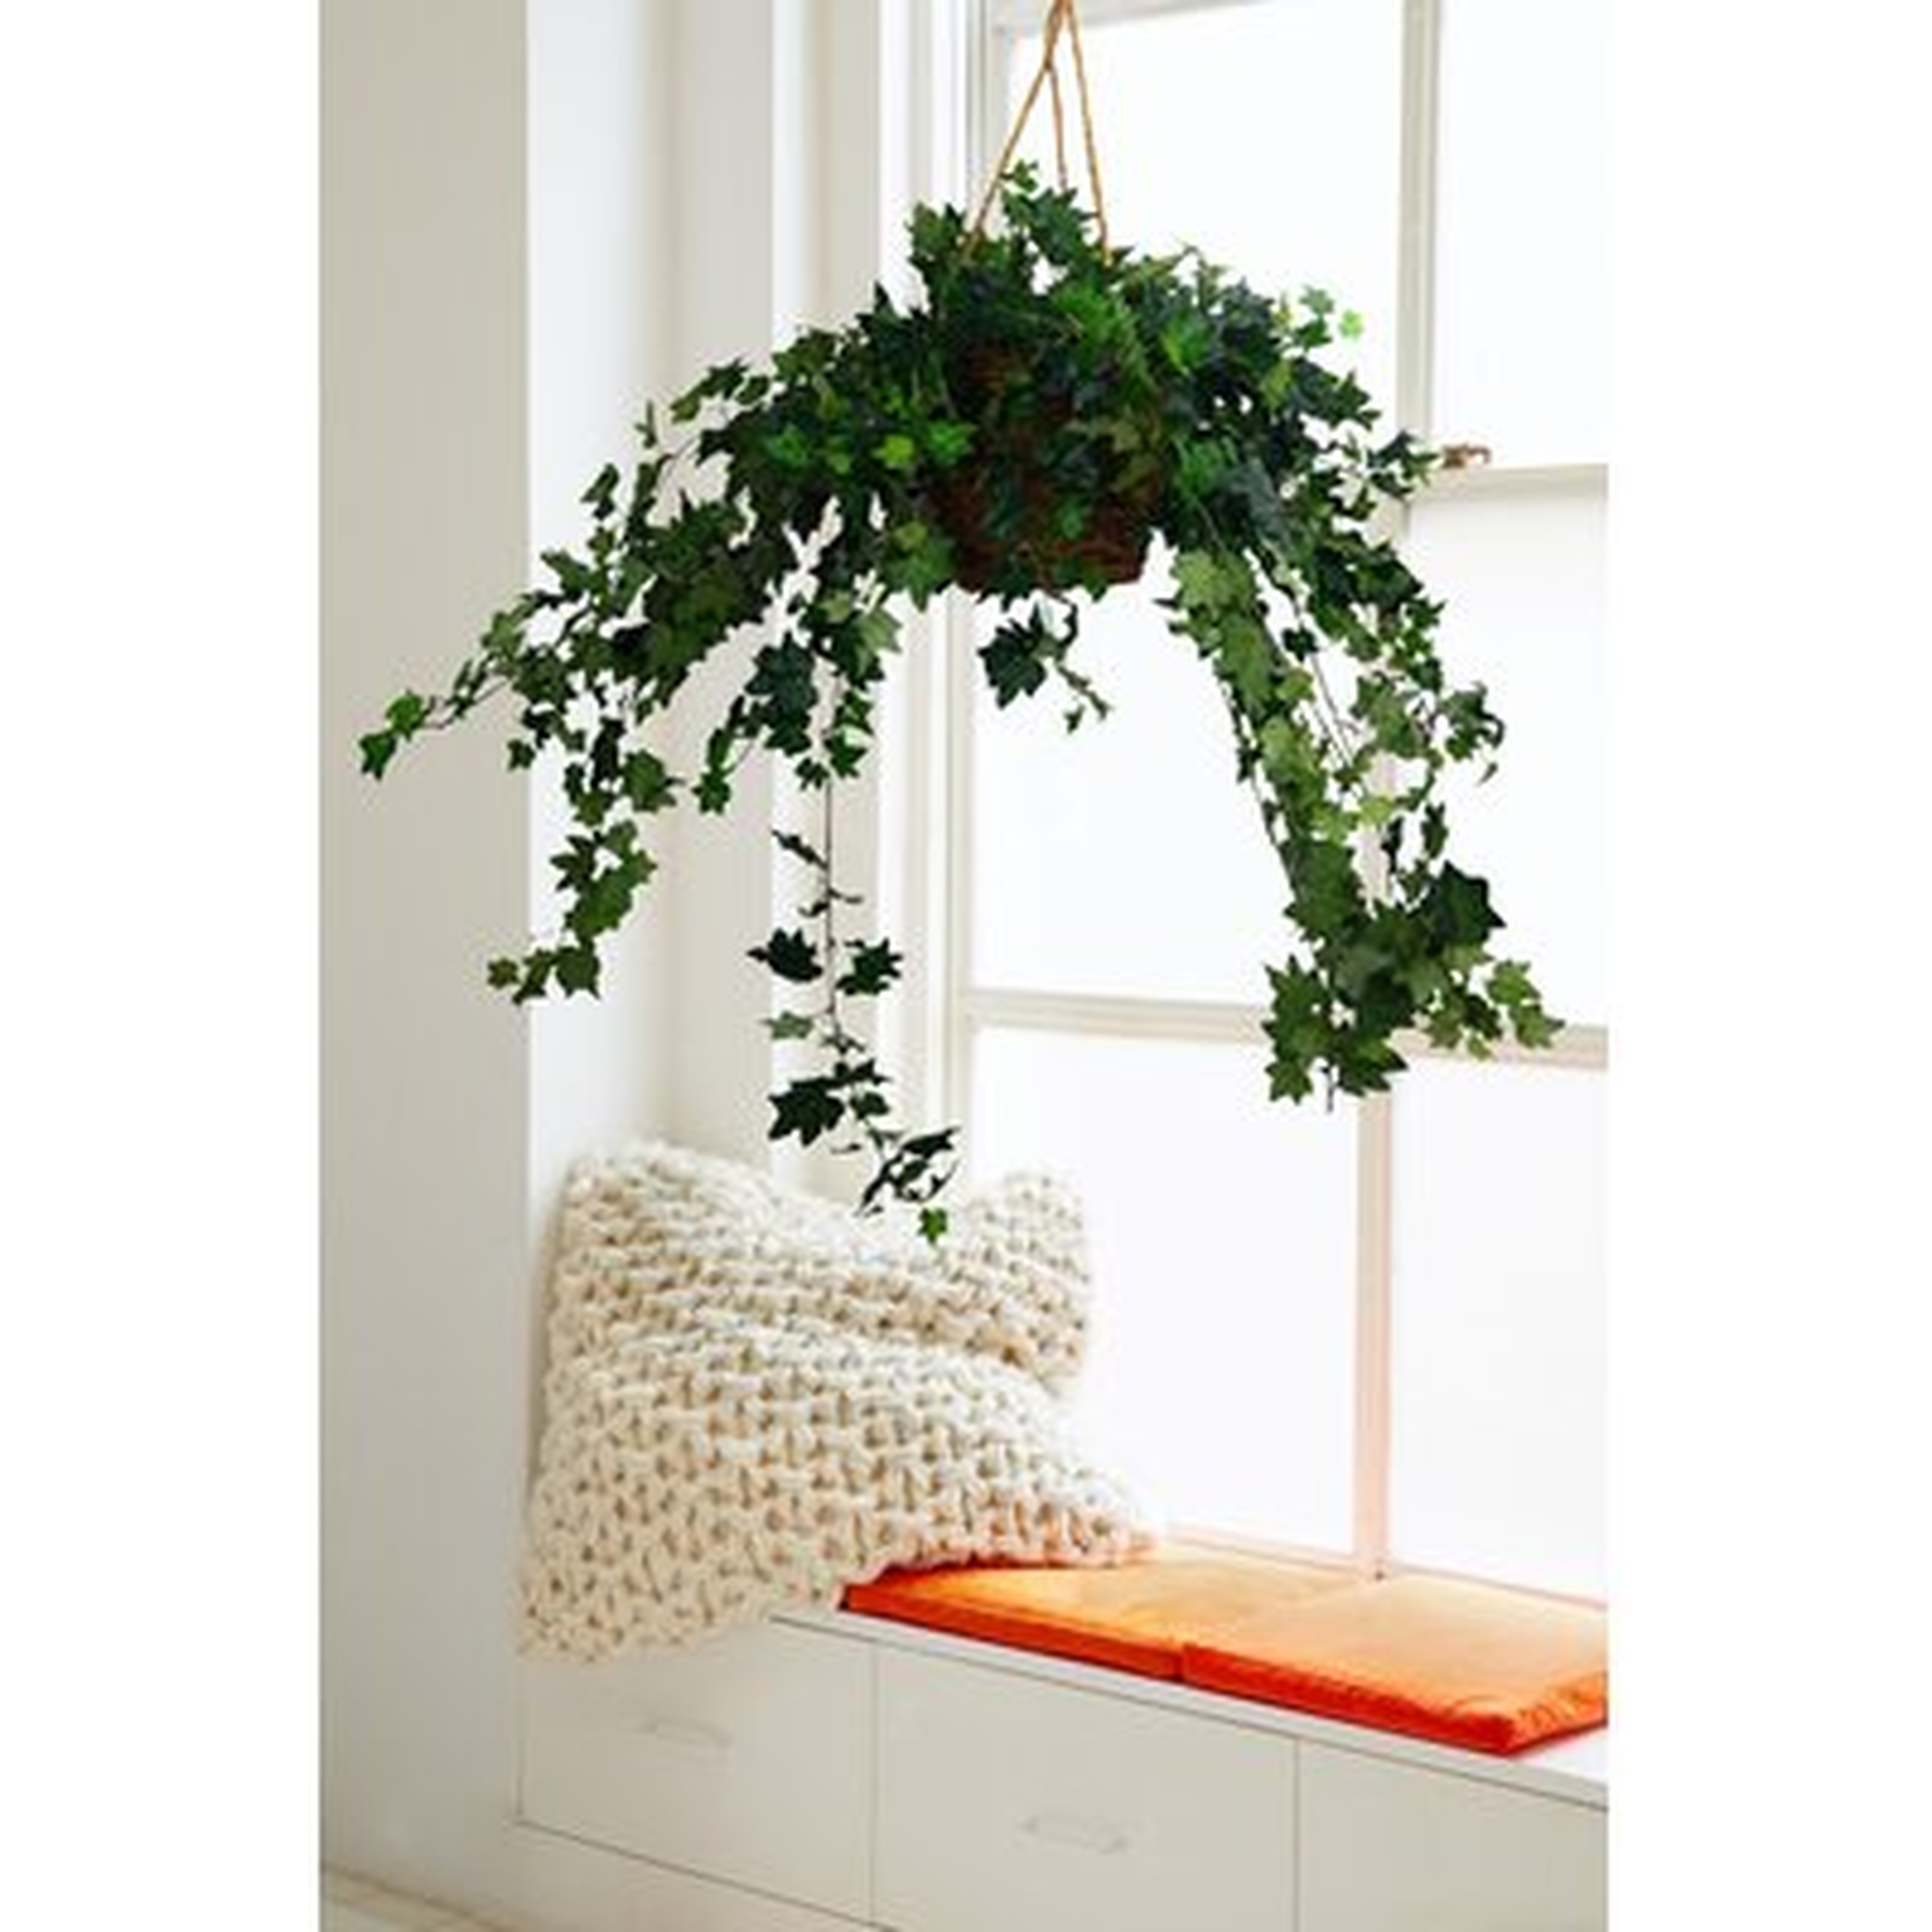 42" Artificial Ivy Plant in Basket - Wayfair